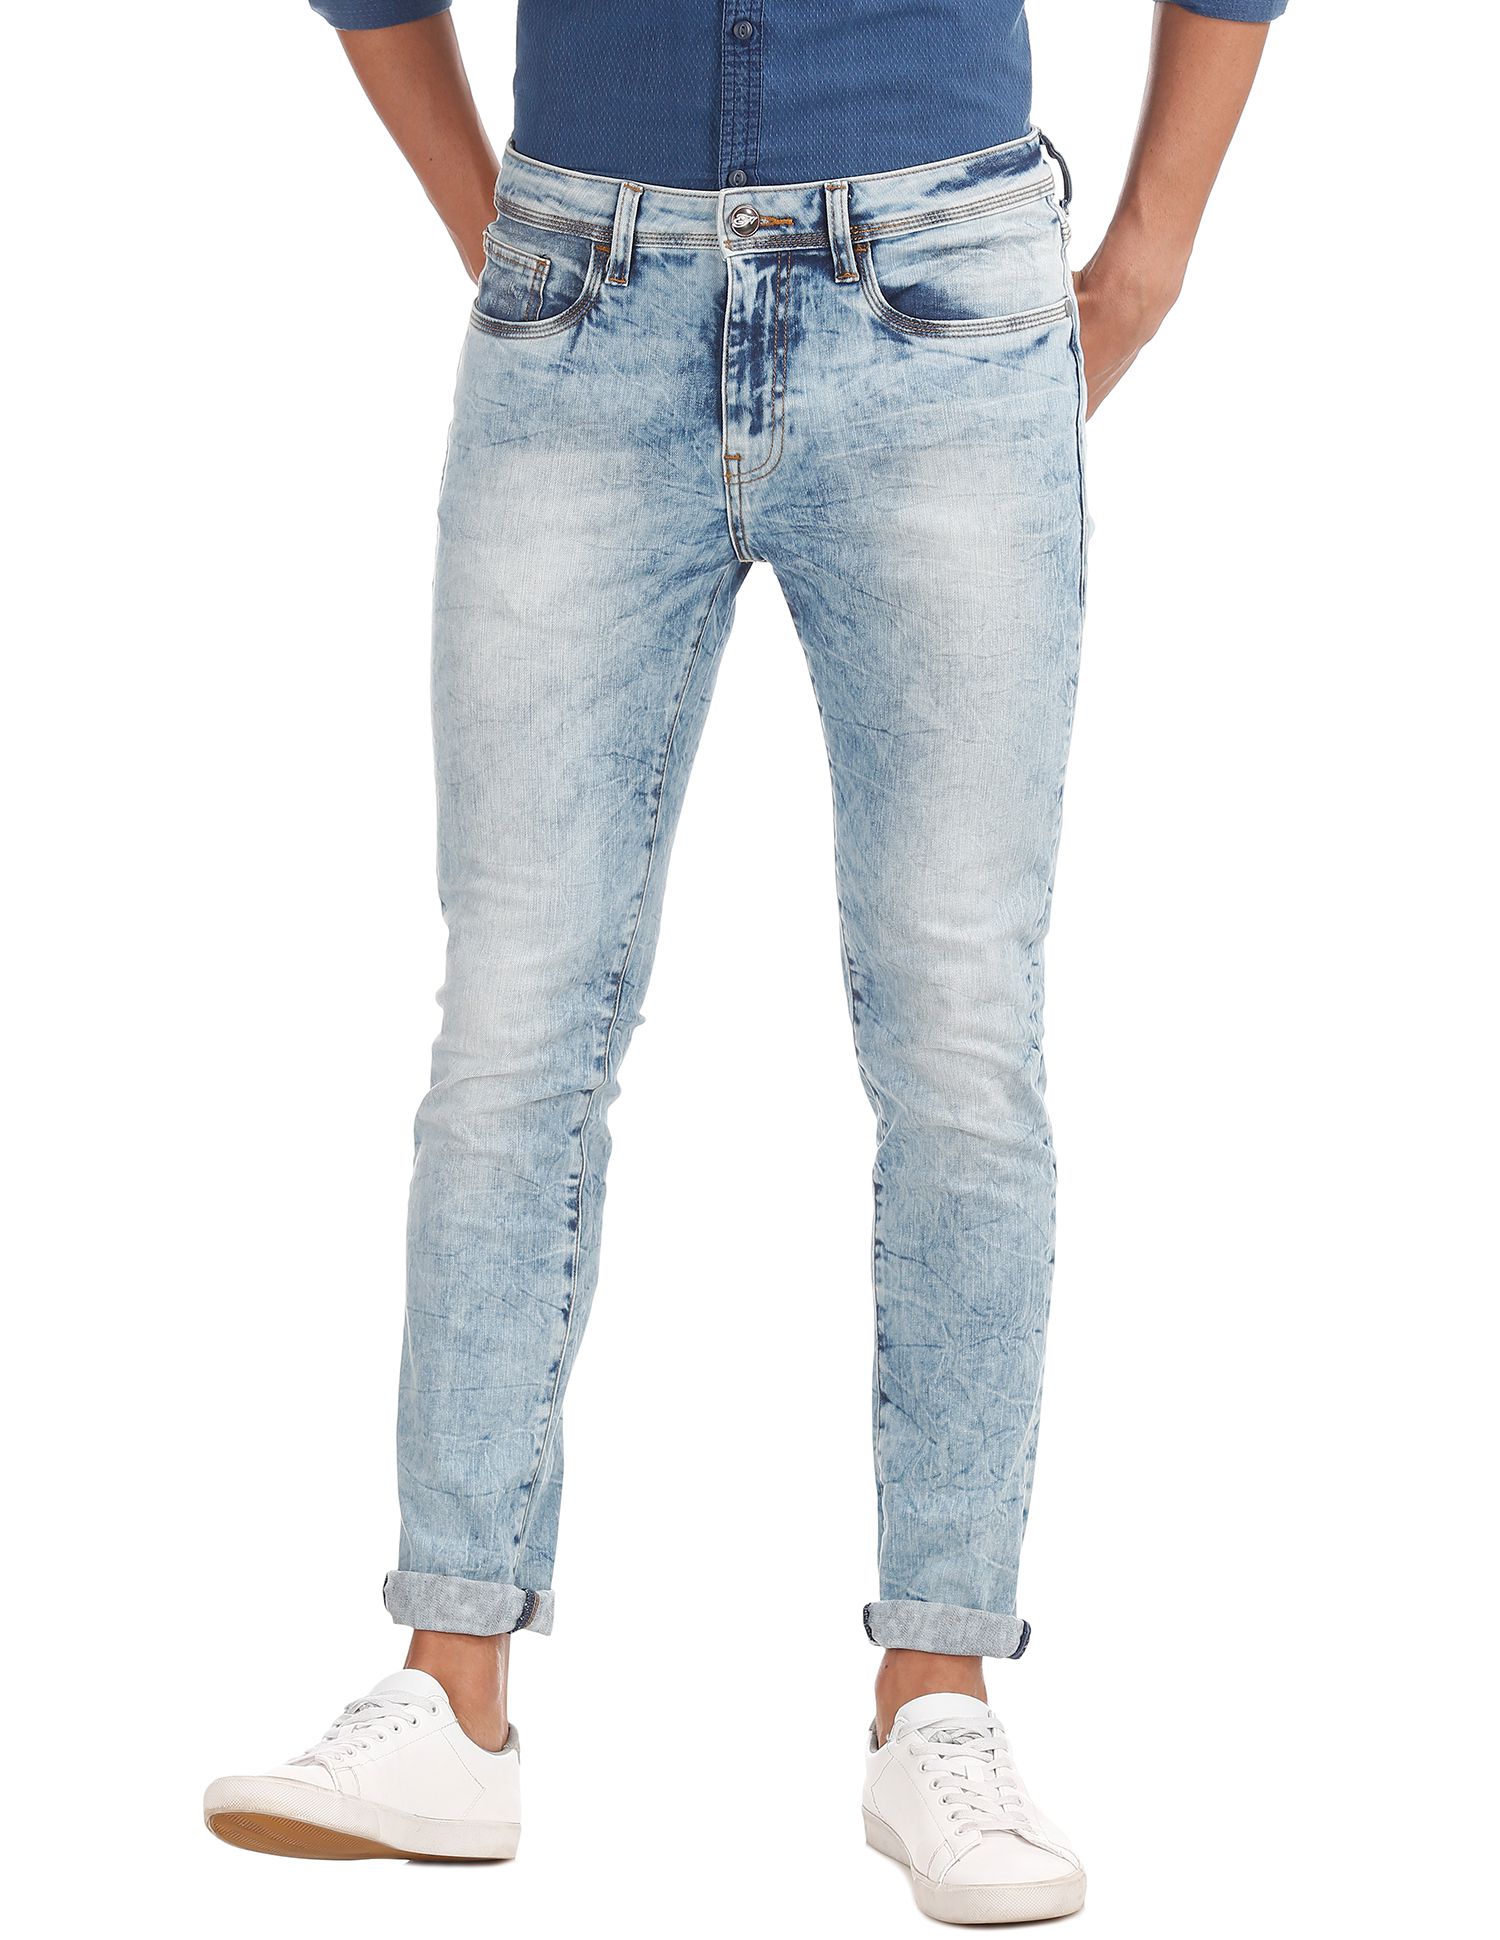 Ed Hardy Blue Slim Jeans - Buy Ed Hardy Blue Slim Jeans Online at Best ...